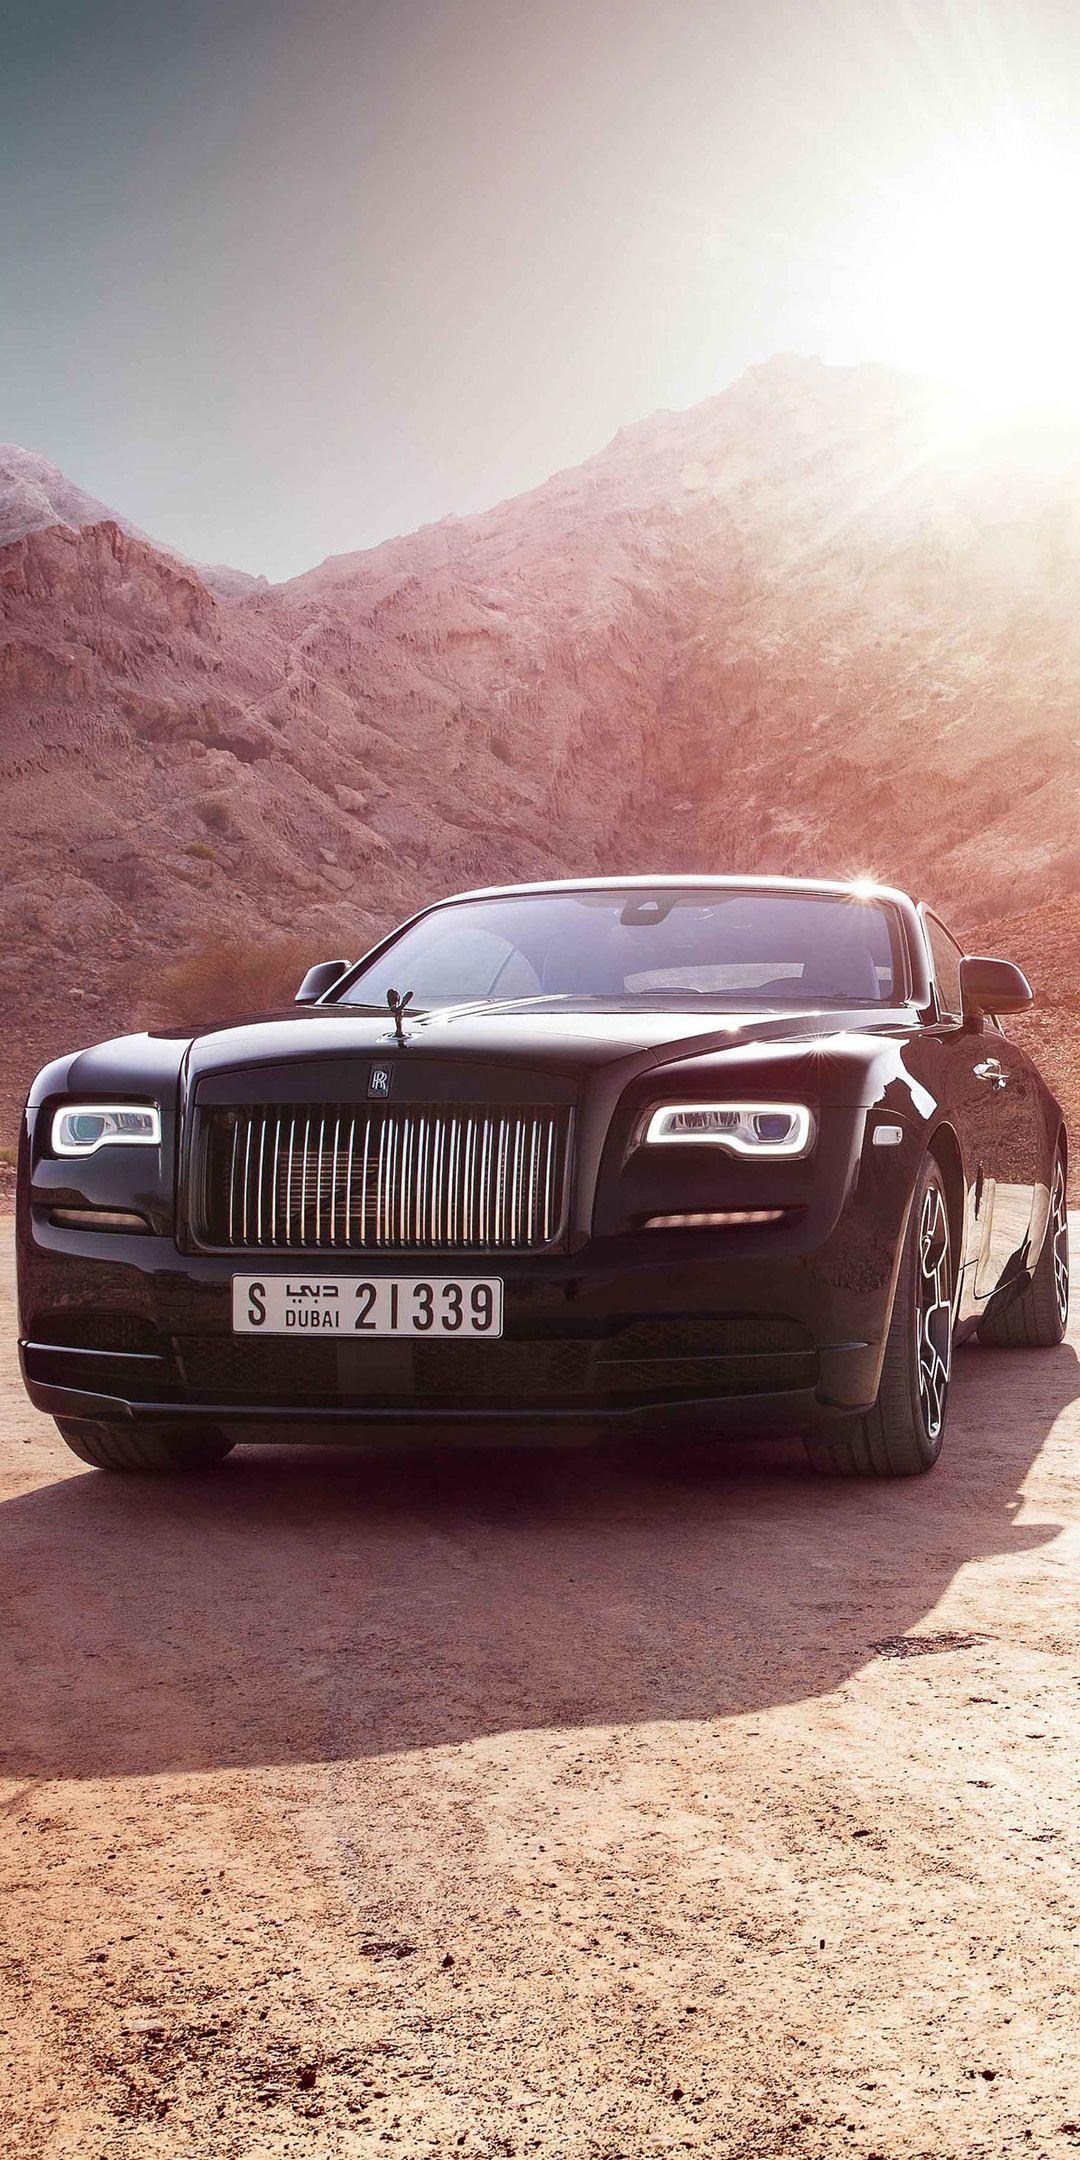 Rolls Royce Wraith Black Badge 4k One Plus 5T, Honor 7x